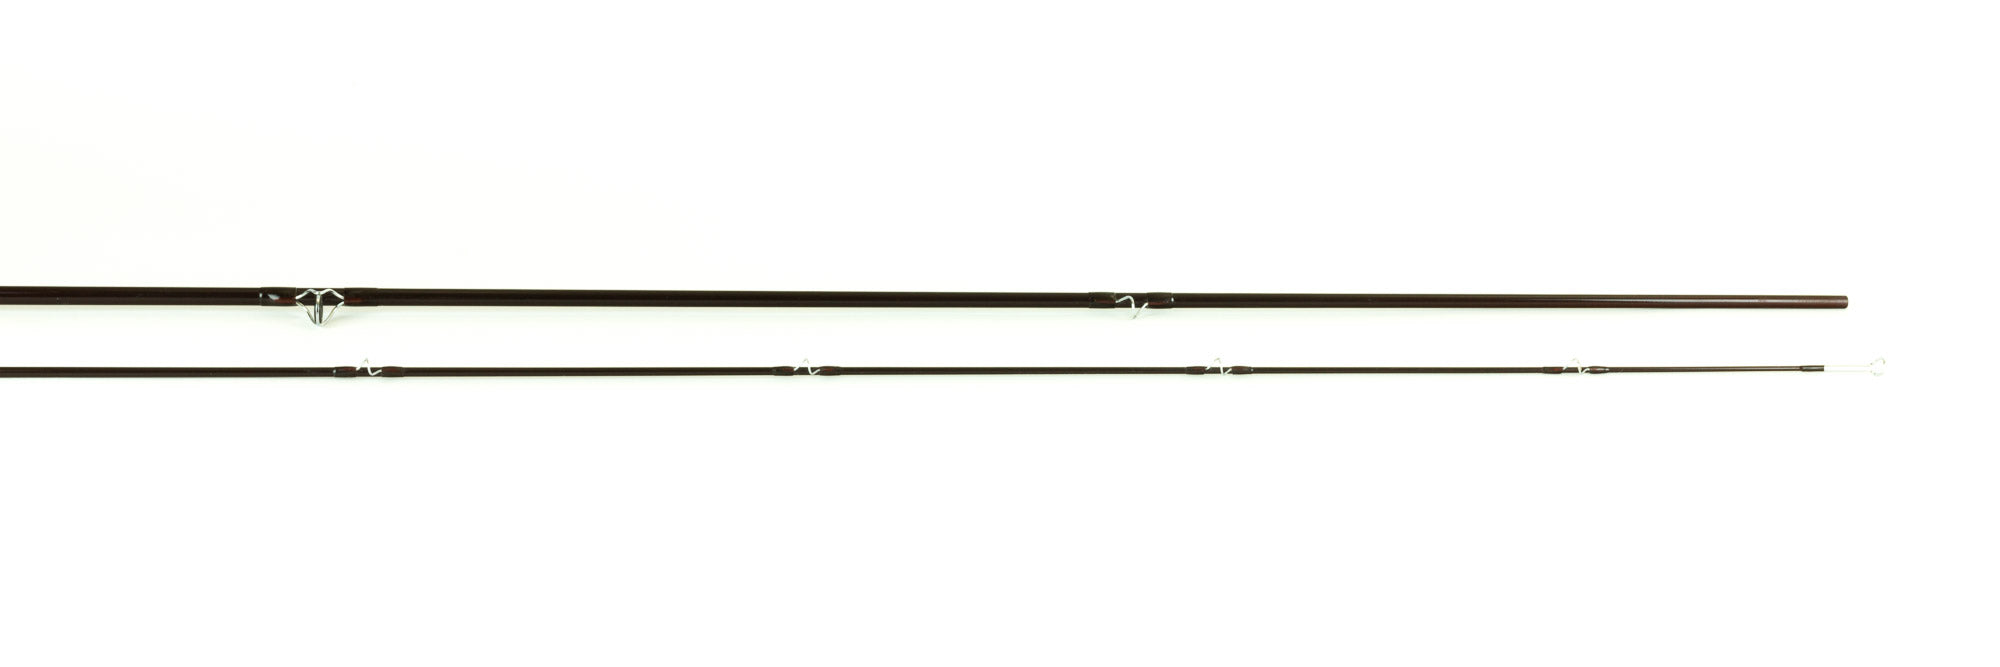 Sage Graphite III GFL 590 LL 5wt 9'0 Fly fishing rod w/Sock Tube  Excellent++